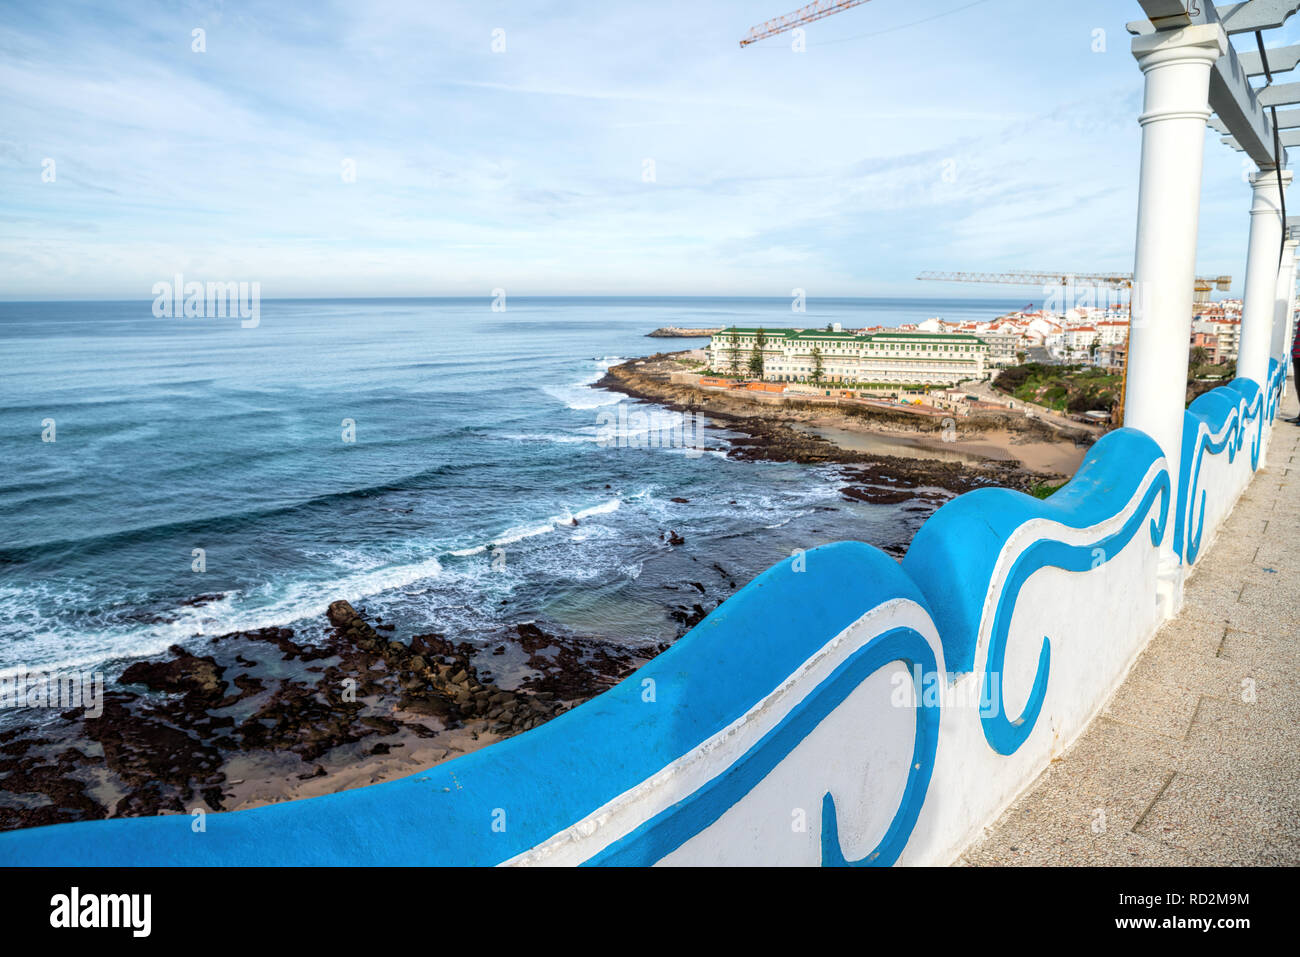 Praia do Norte, North Beach, Ericeira, Lisbon Coast, Portugal Stock Photo